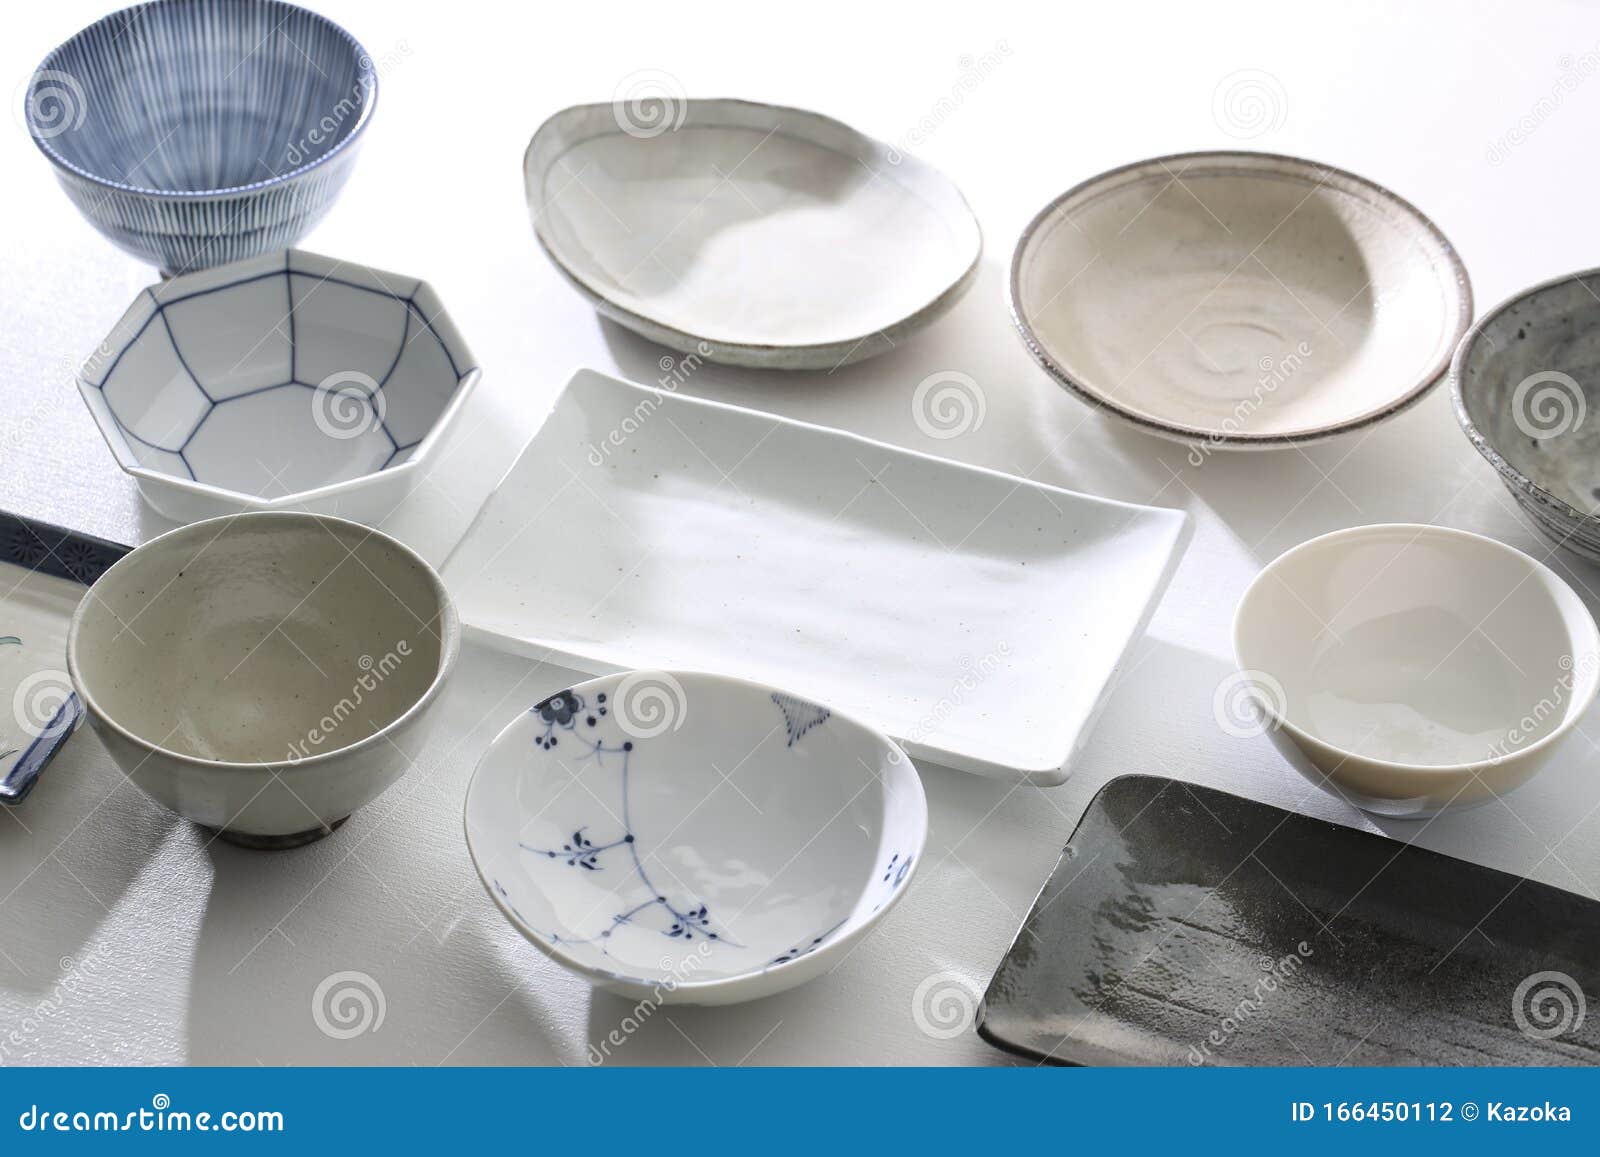 group photo of japanese tableware